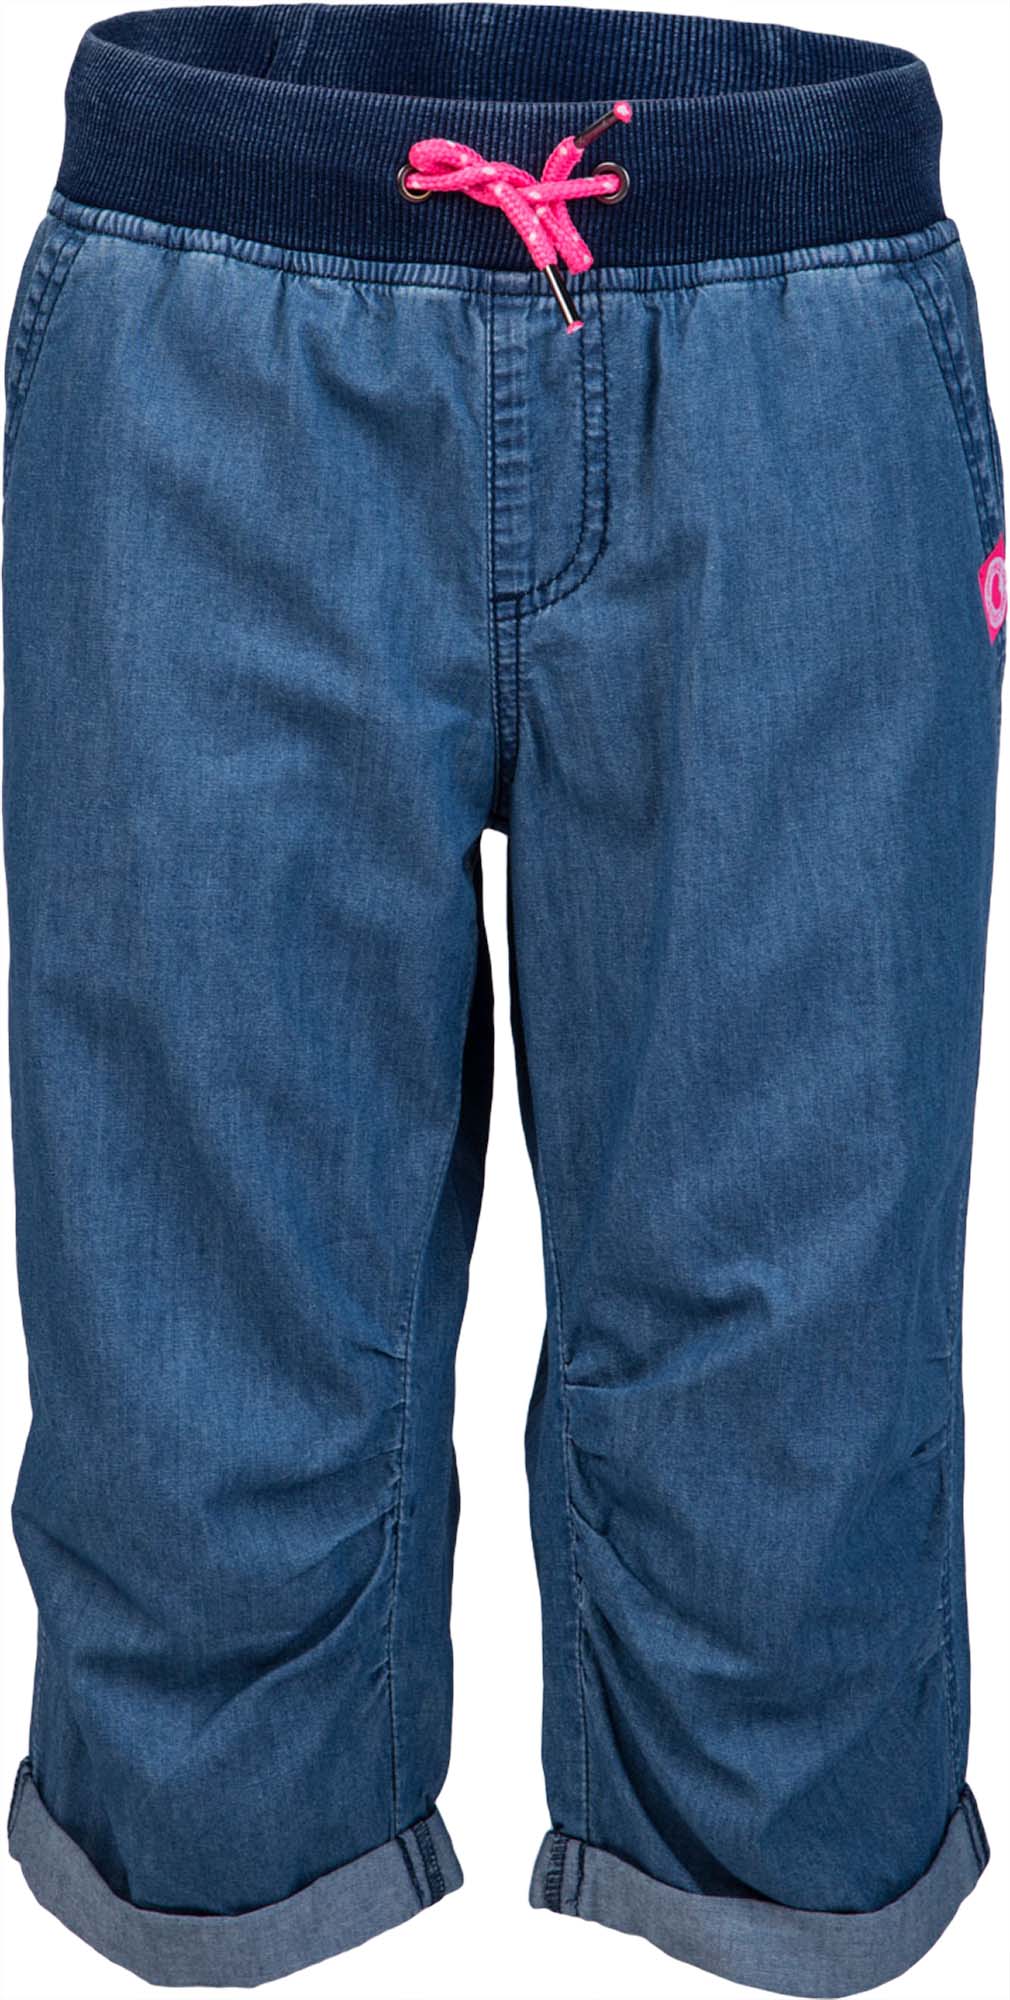 Children's 3/4 length pants